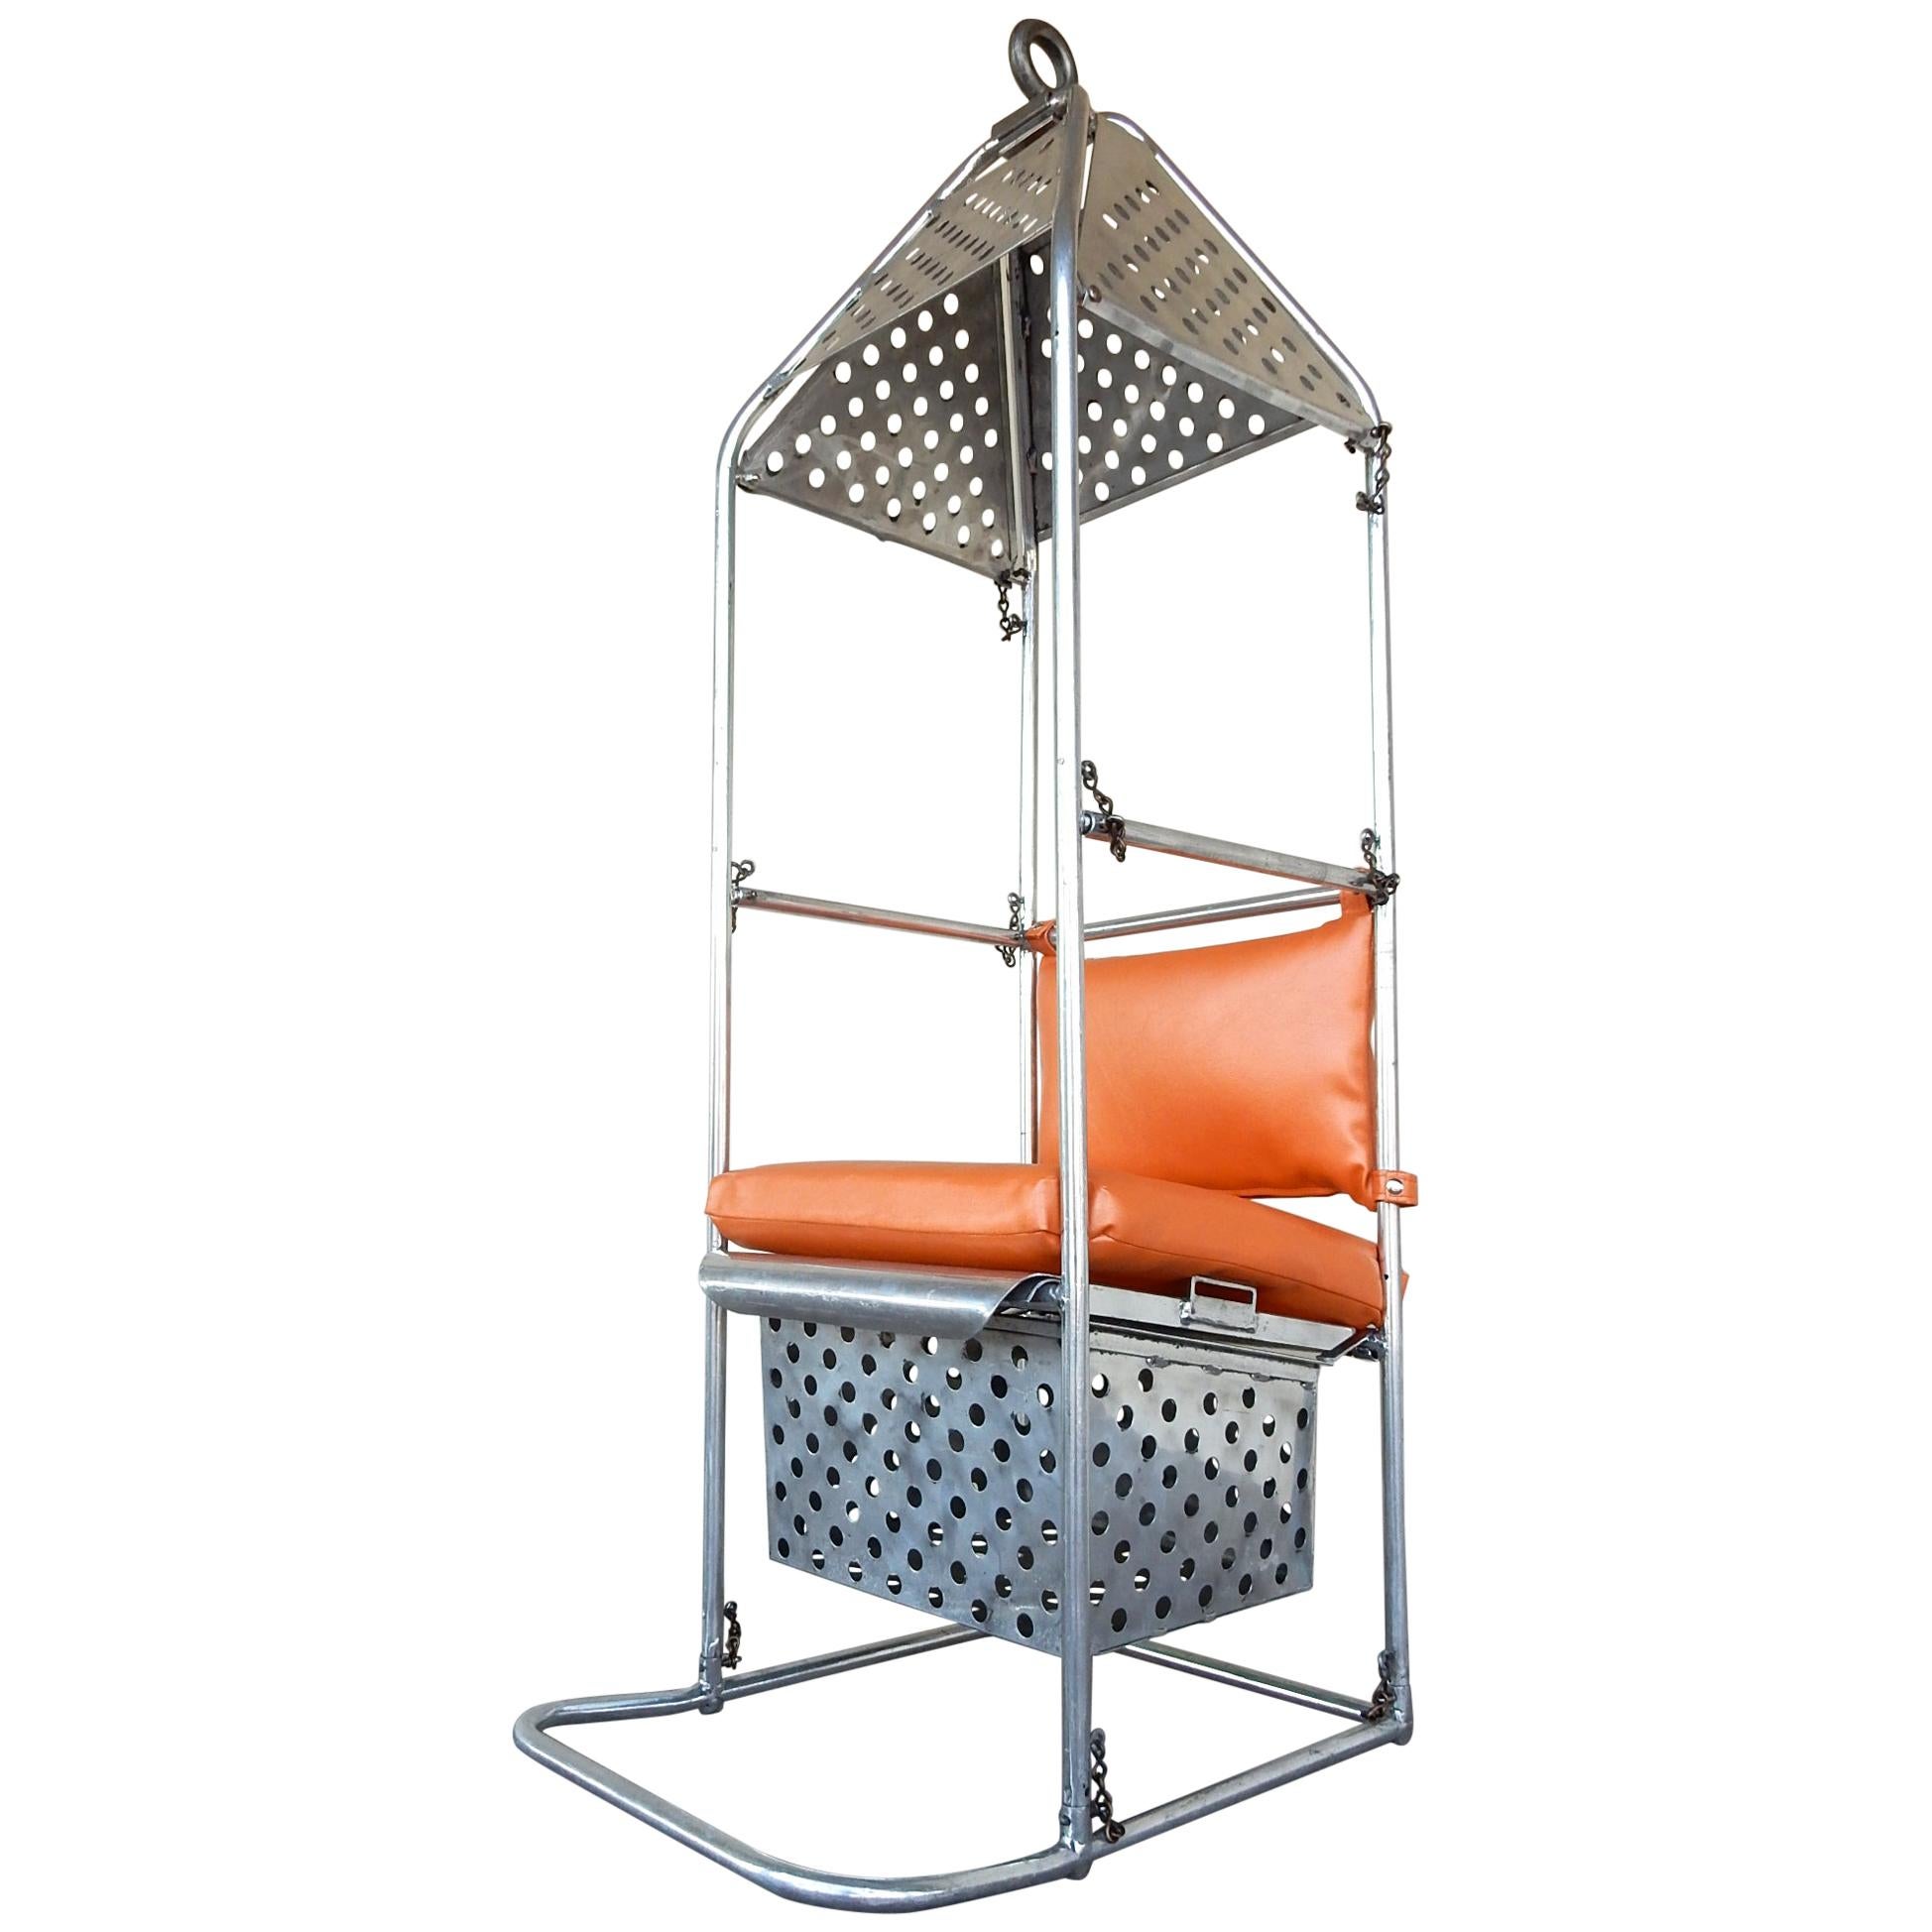 1950s Industrial Aluminum Crane or Airplane Hoist Canopy Chair For Sale